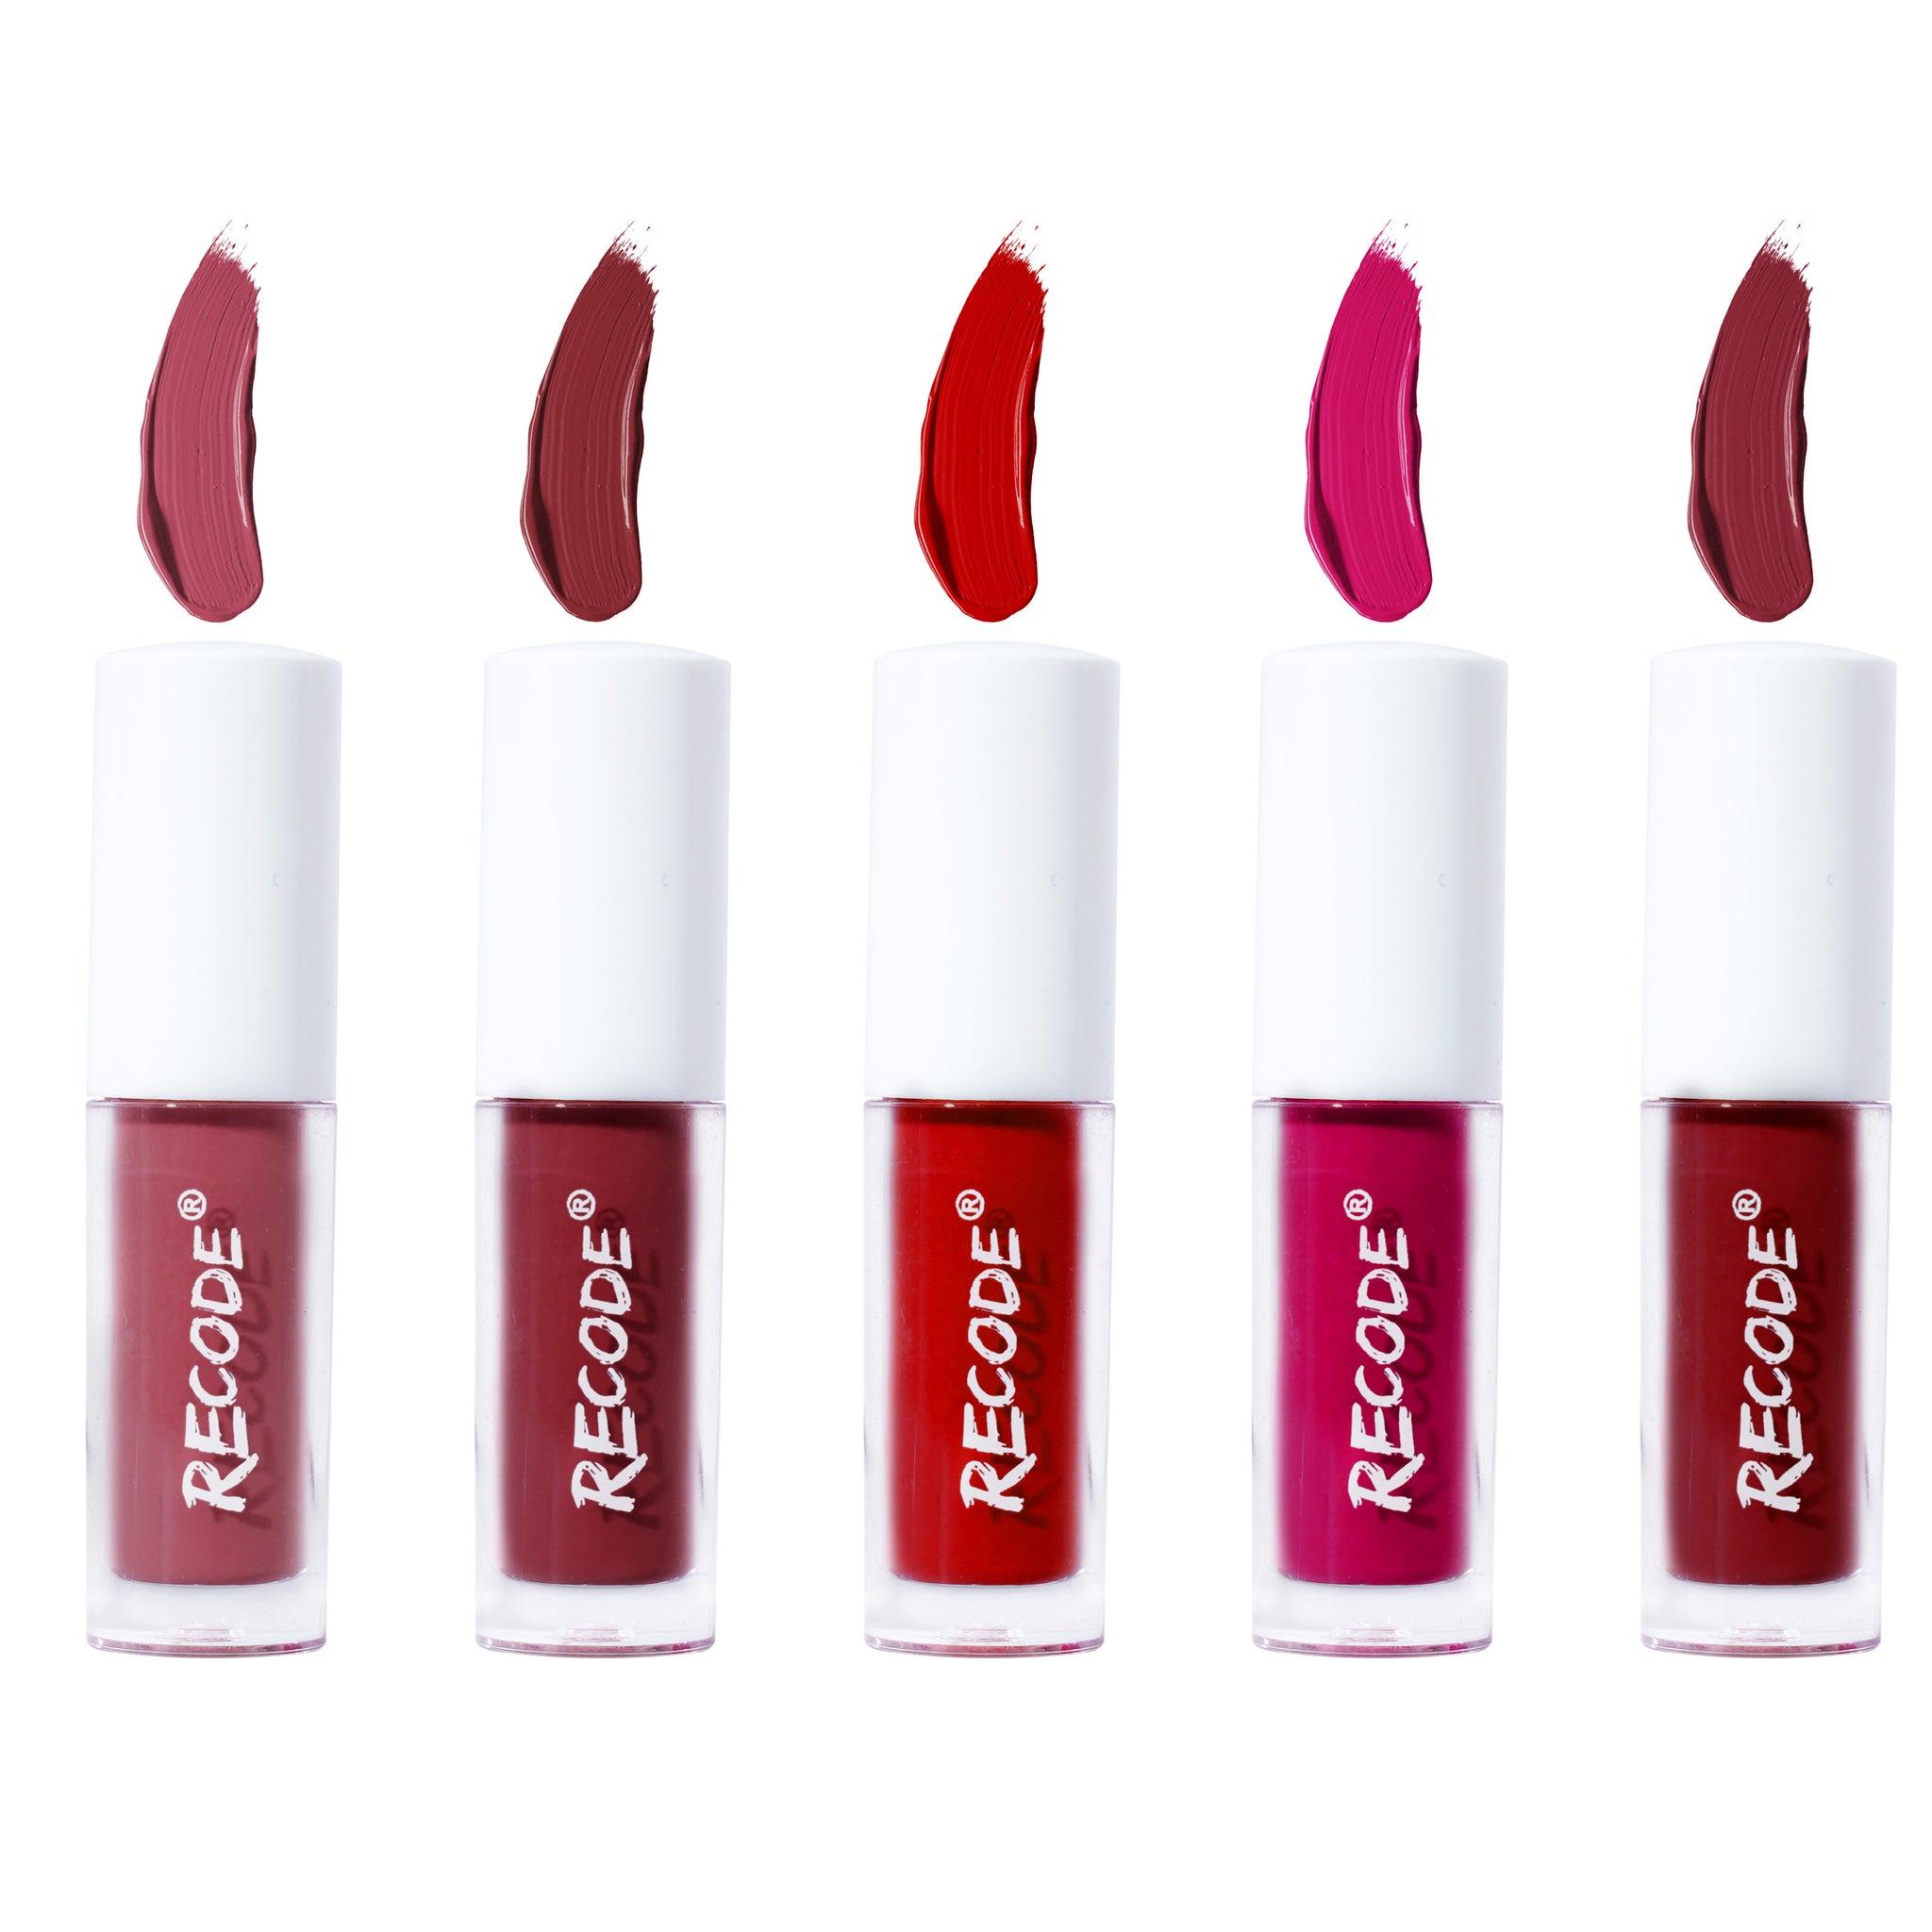 Recode Mini Mousse Lipsticks - Bridal Bold - 5 x 1.75 ml - 8.75 ml